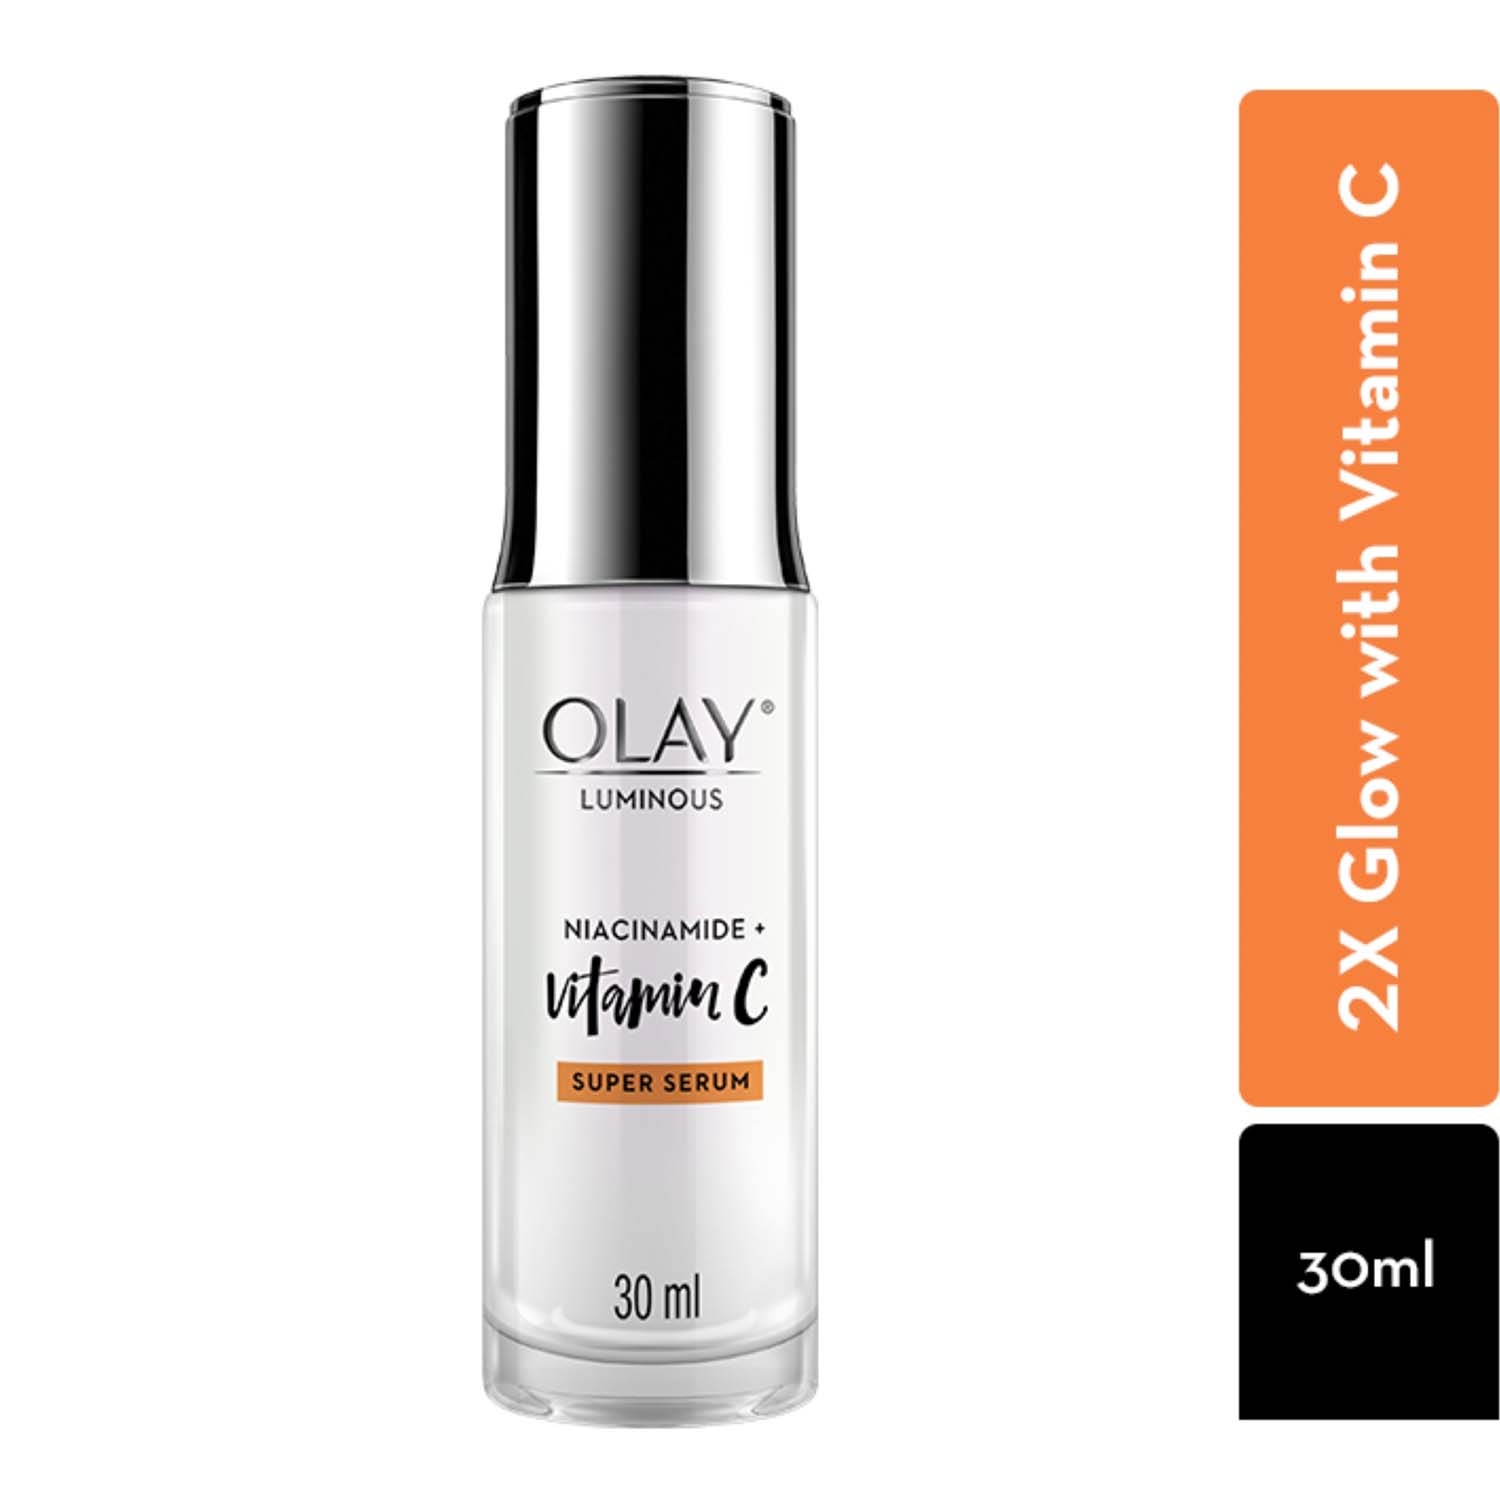 Olay | Olay Luminous Vitamin C Super Serum (30ml)